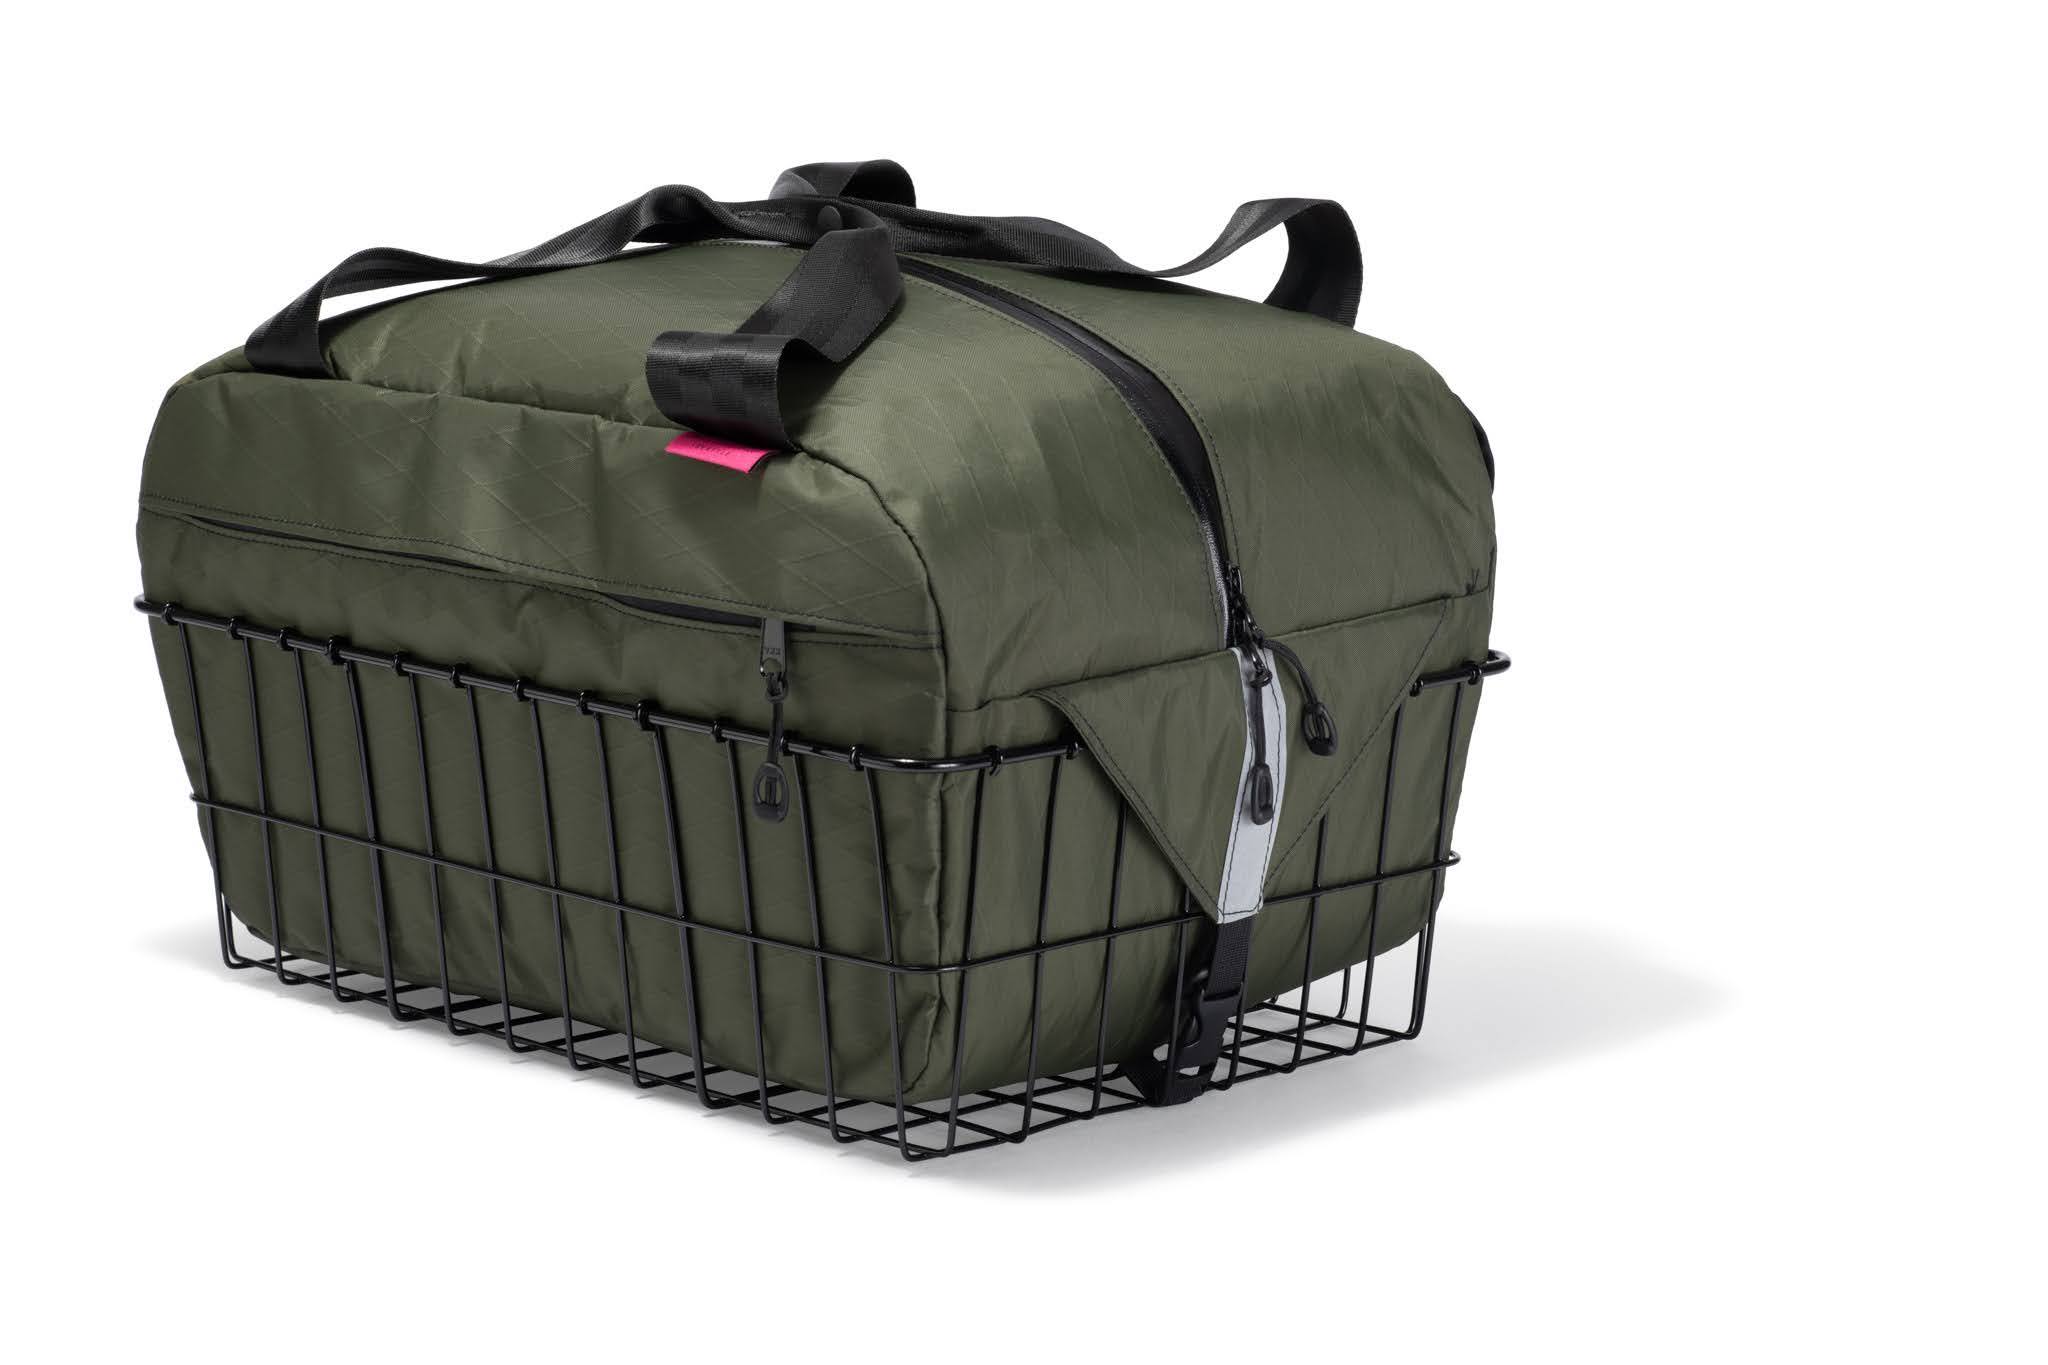 2021 Motherloaf Basket Bag dark-green-vx21 Thumbnail